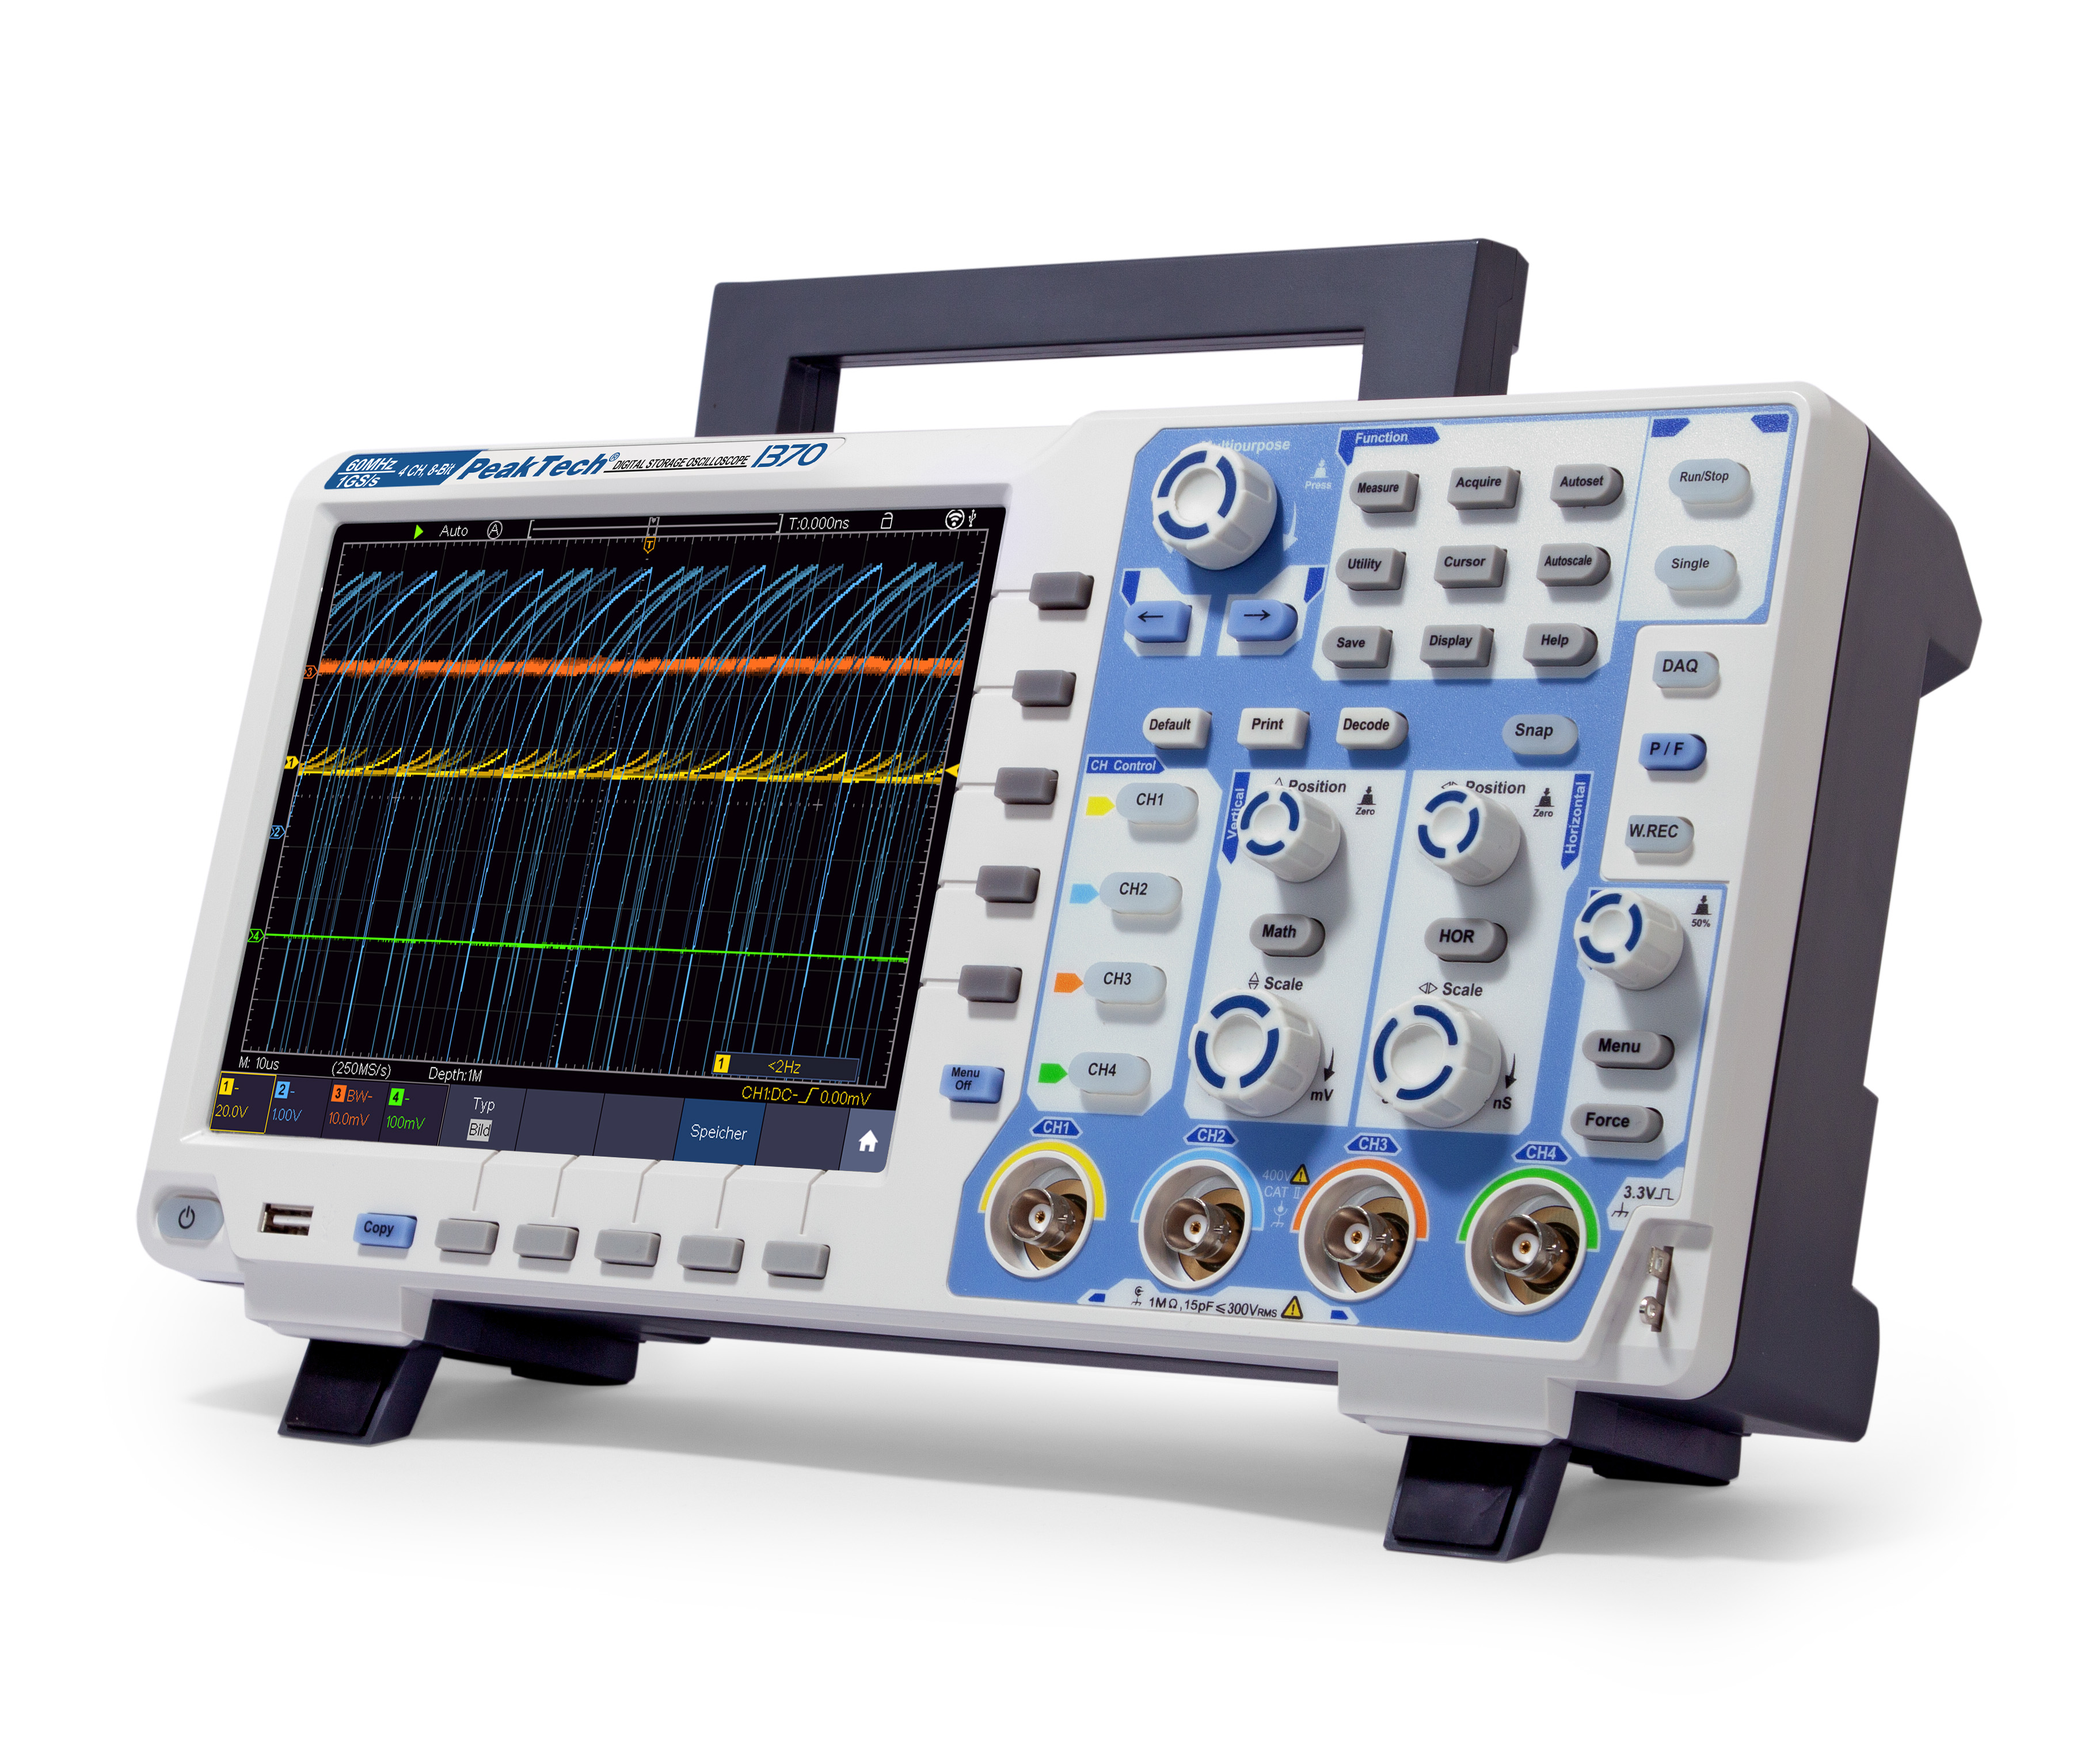 «PeakTech® P 1370» 60 MHz / 4 CH, 1 GS/s touchscreen oscilloscope